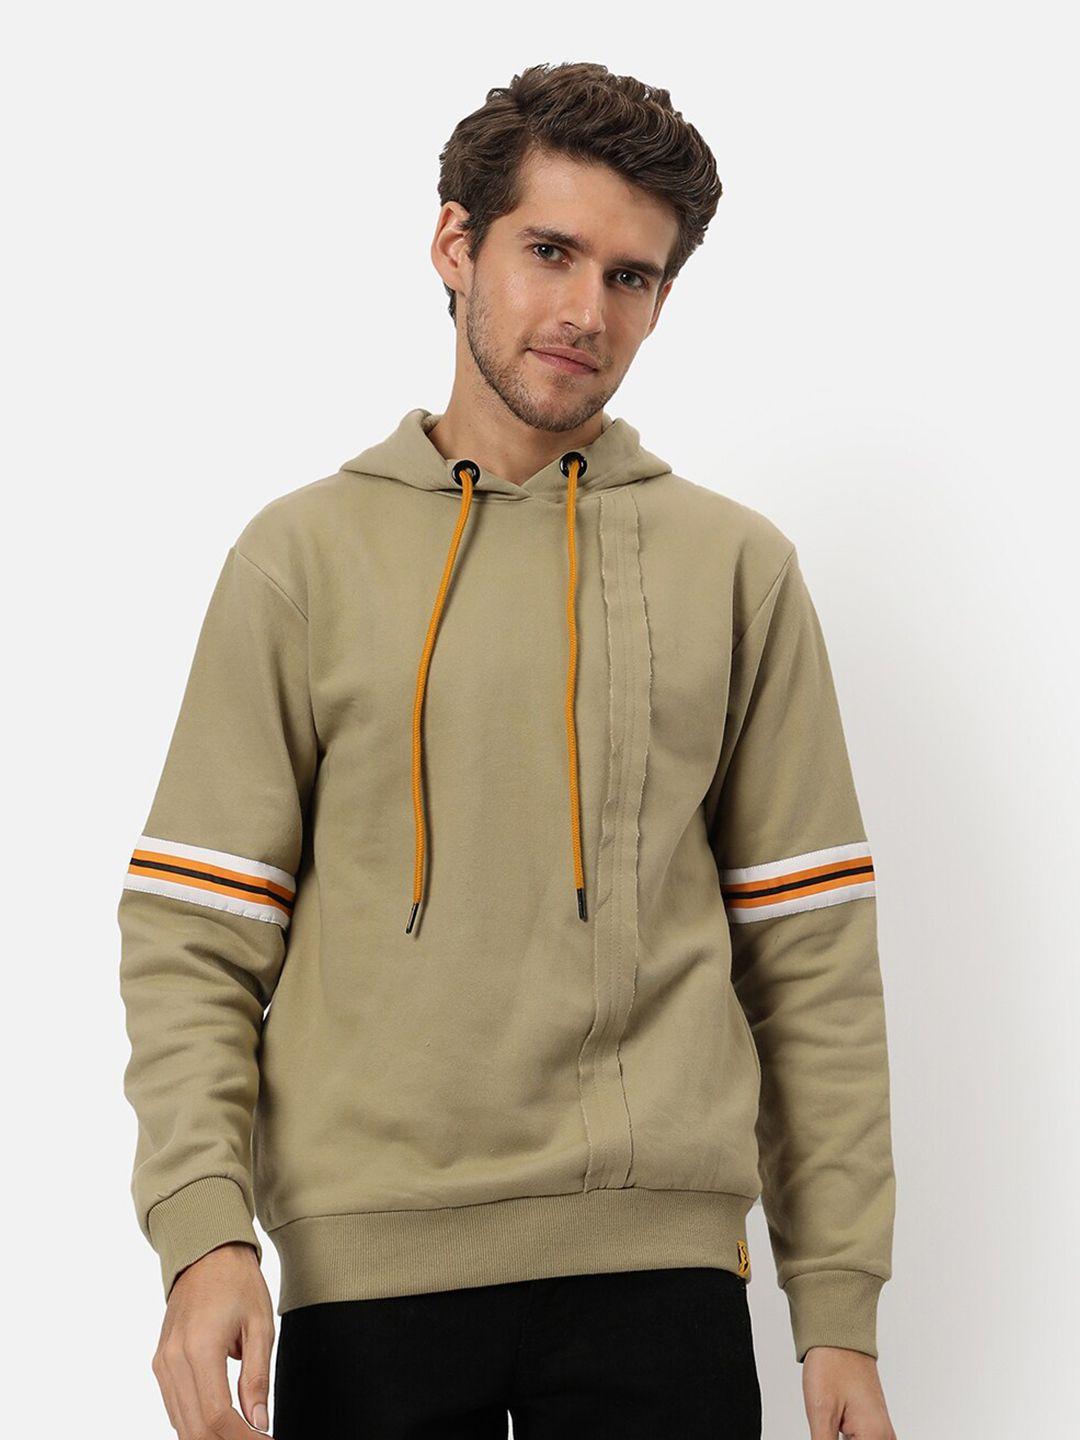 campus-sutra-men-beige-hooded-sweatshirt